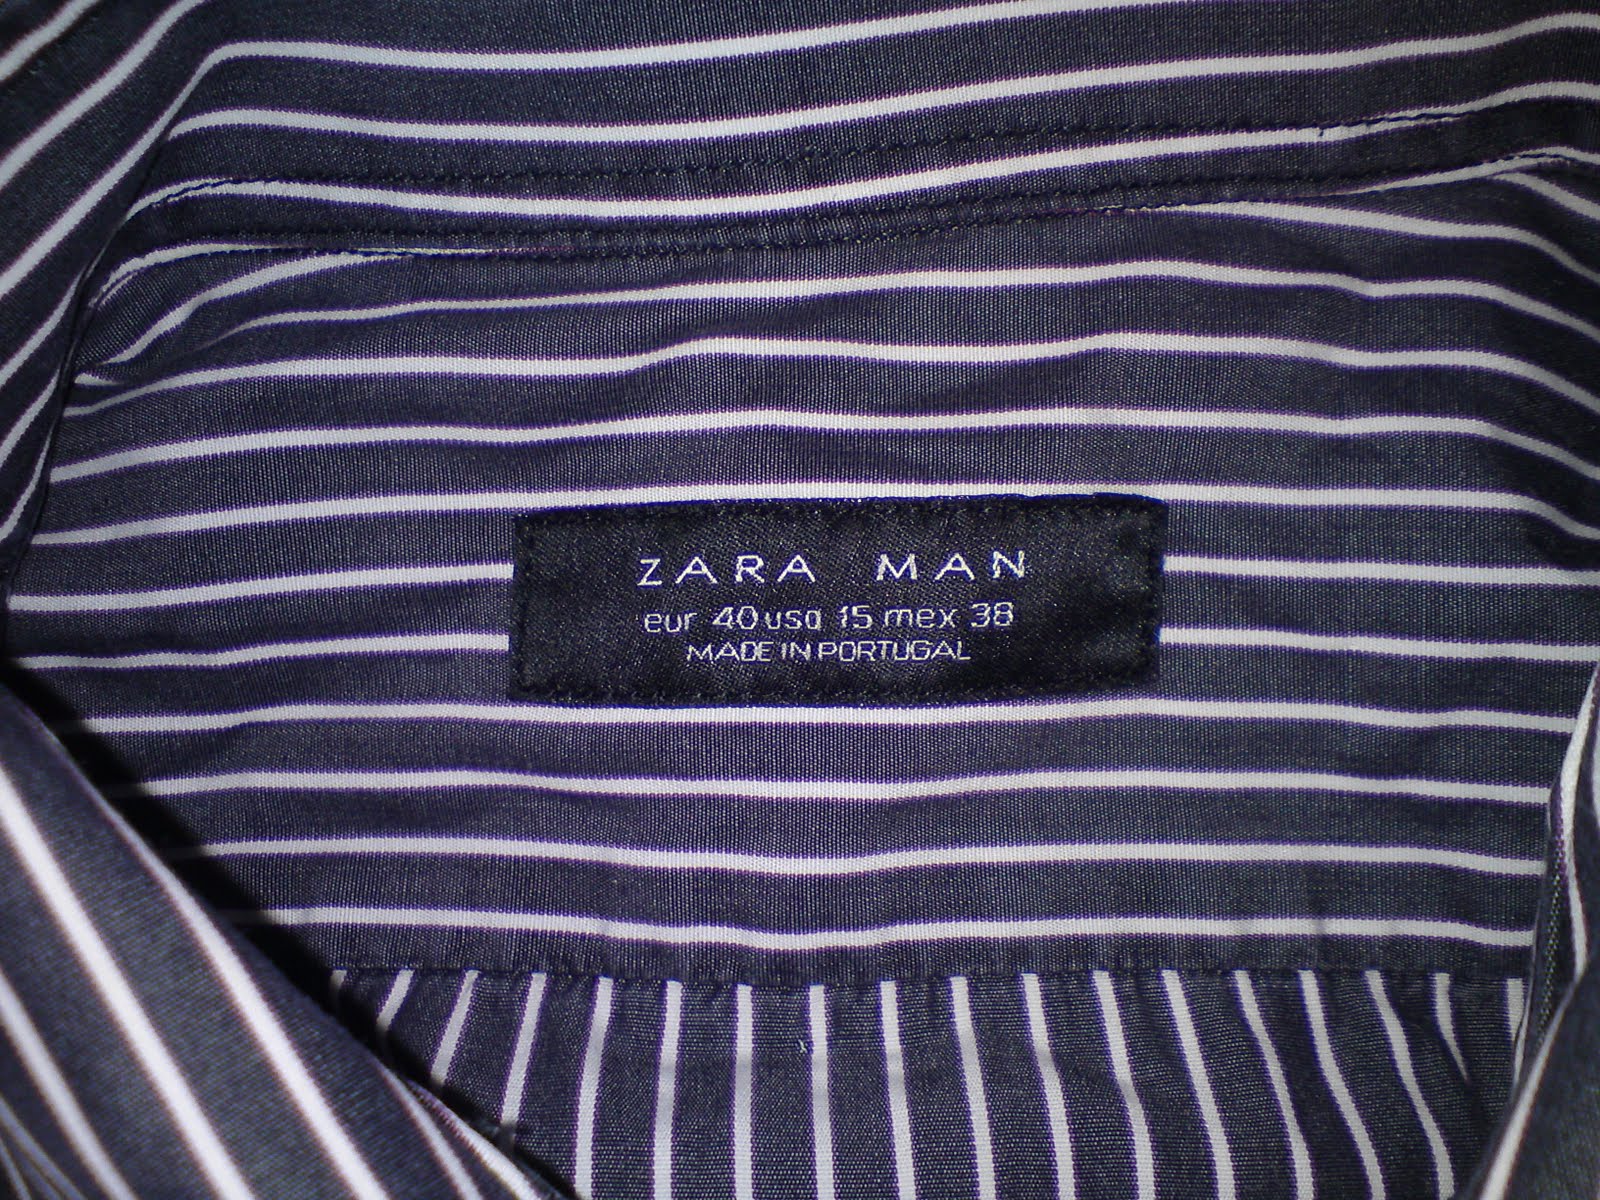 BEGINNER DIVER: zara man shirts.(SOLD).